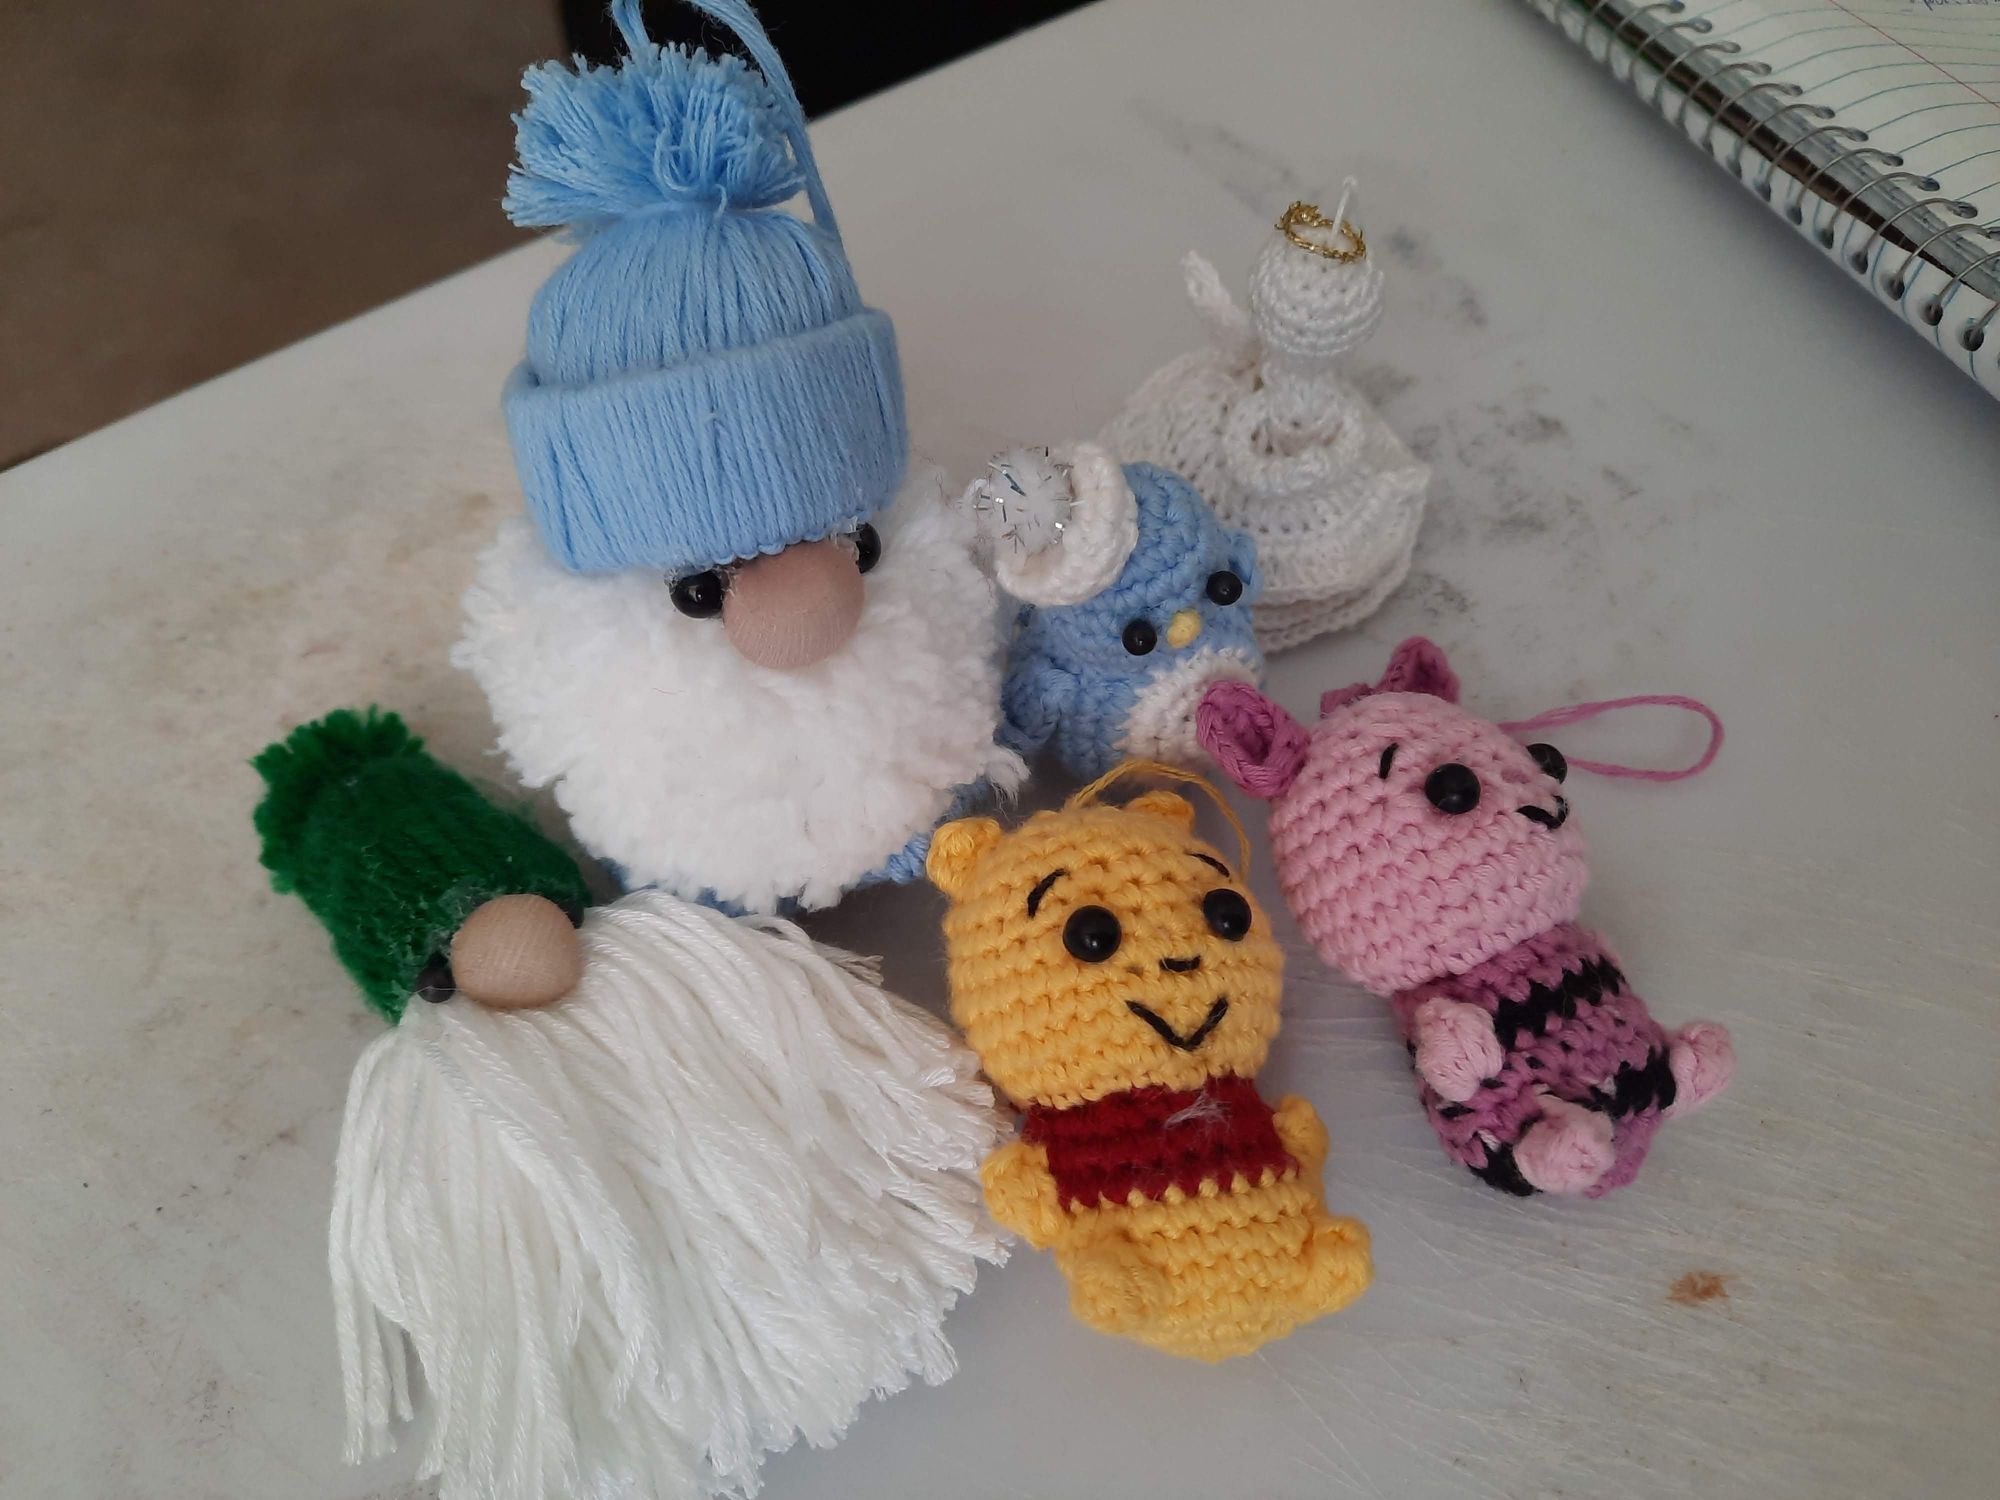 Yarn Crafts and Amigurumi Projects